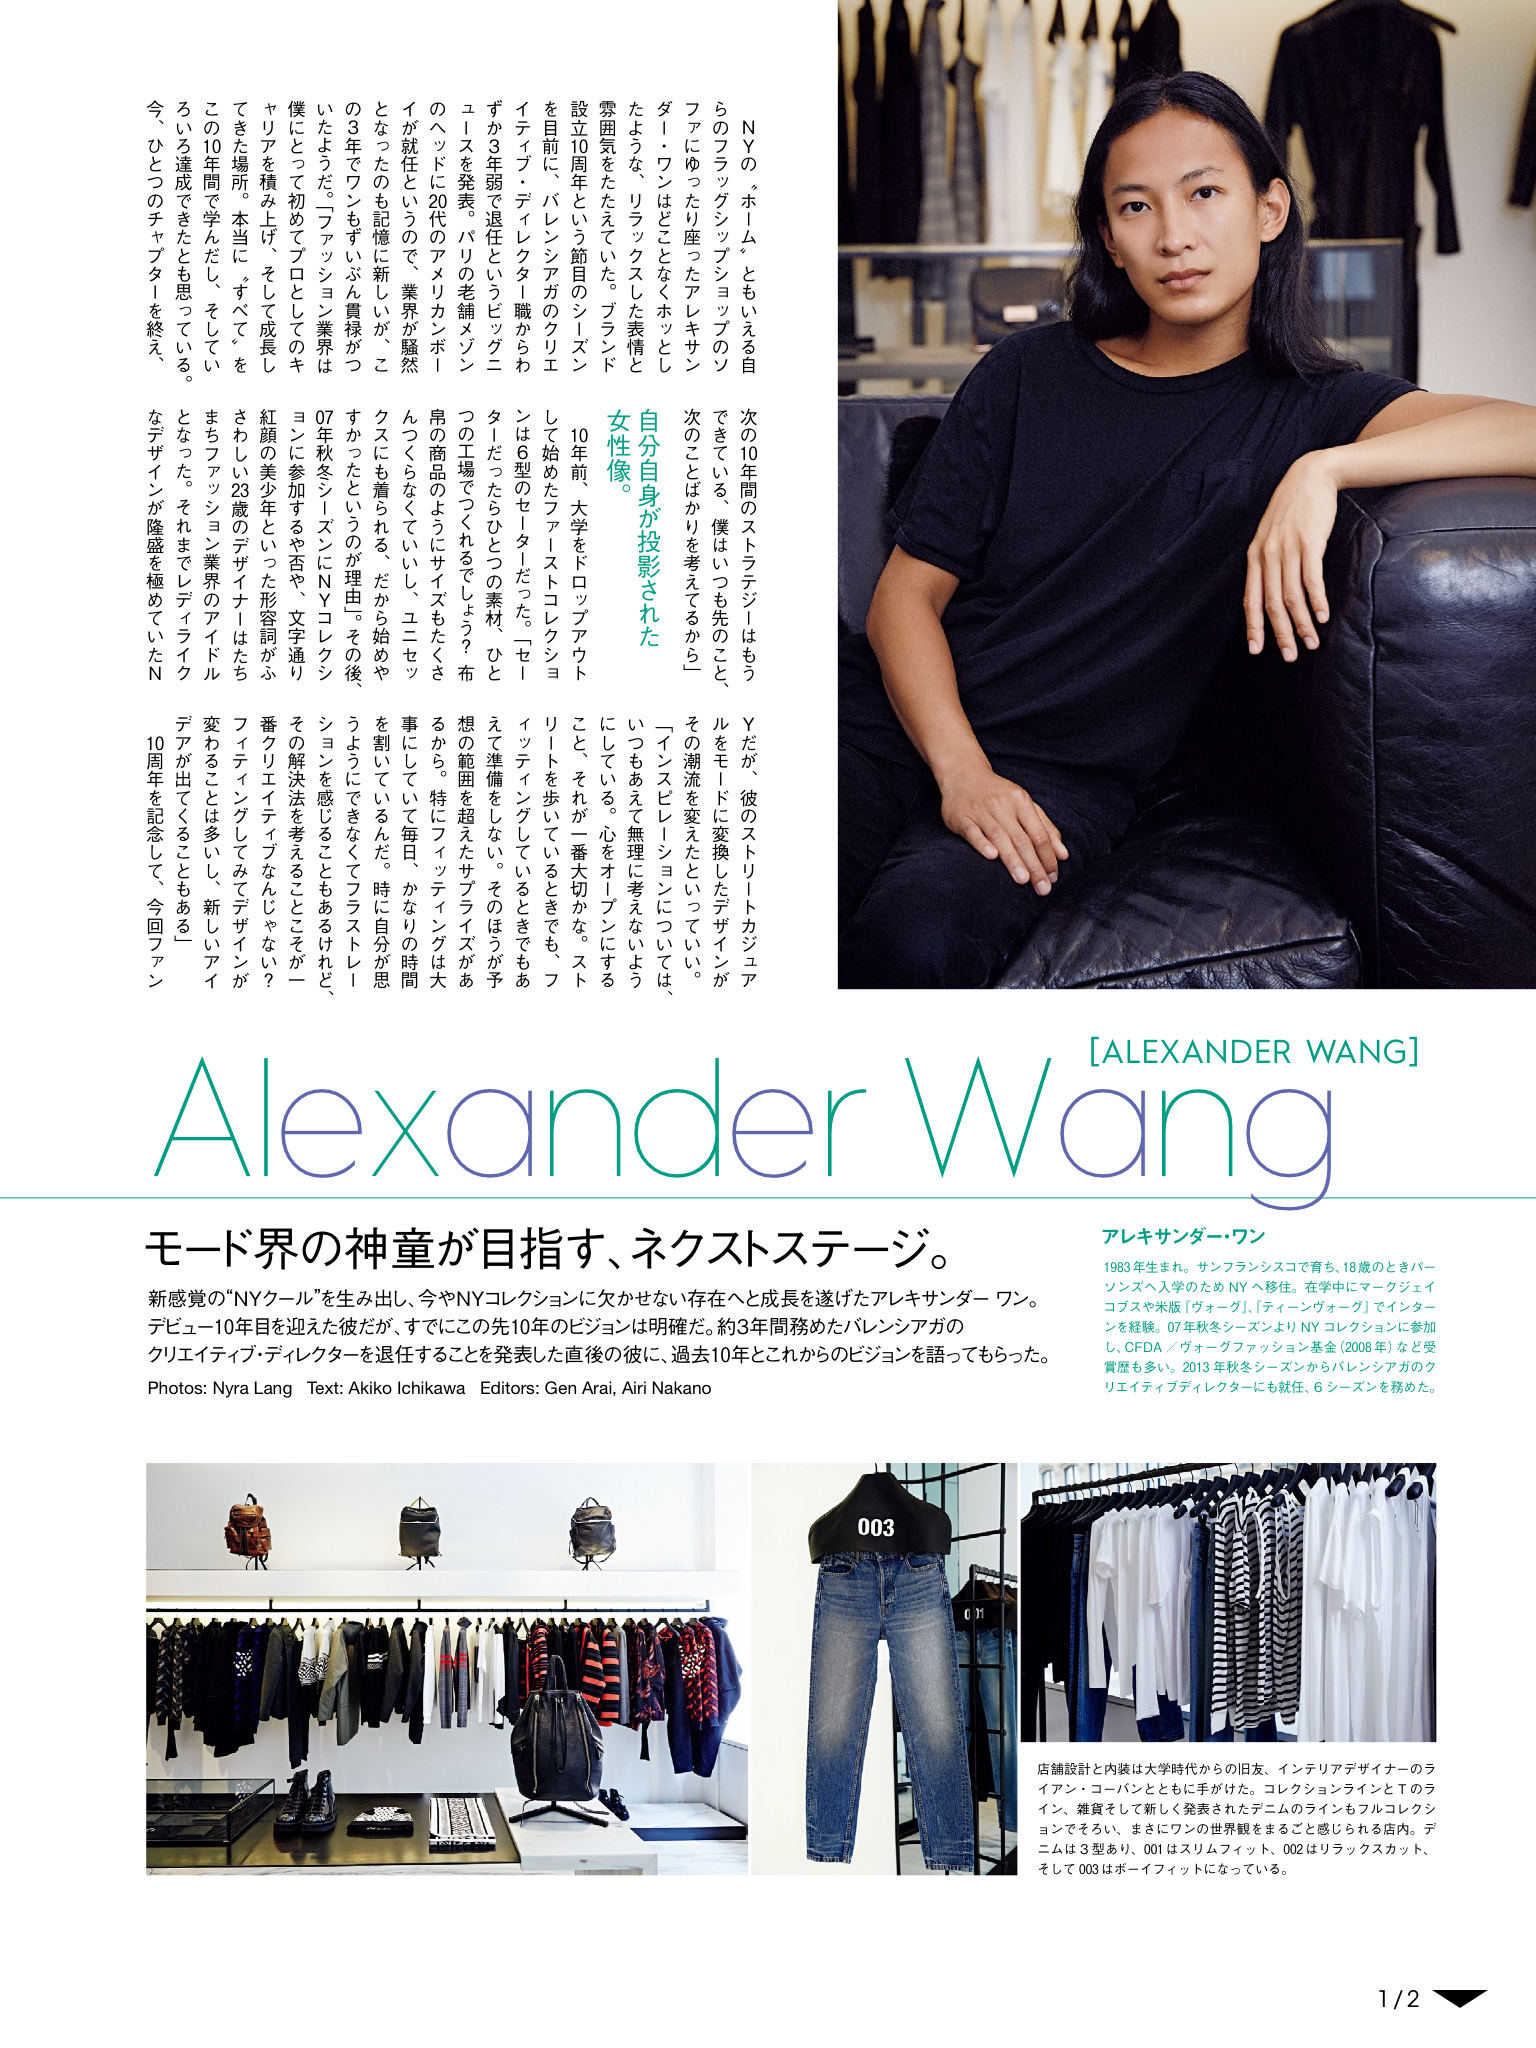 Alexander Wang for Vogue Japan